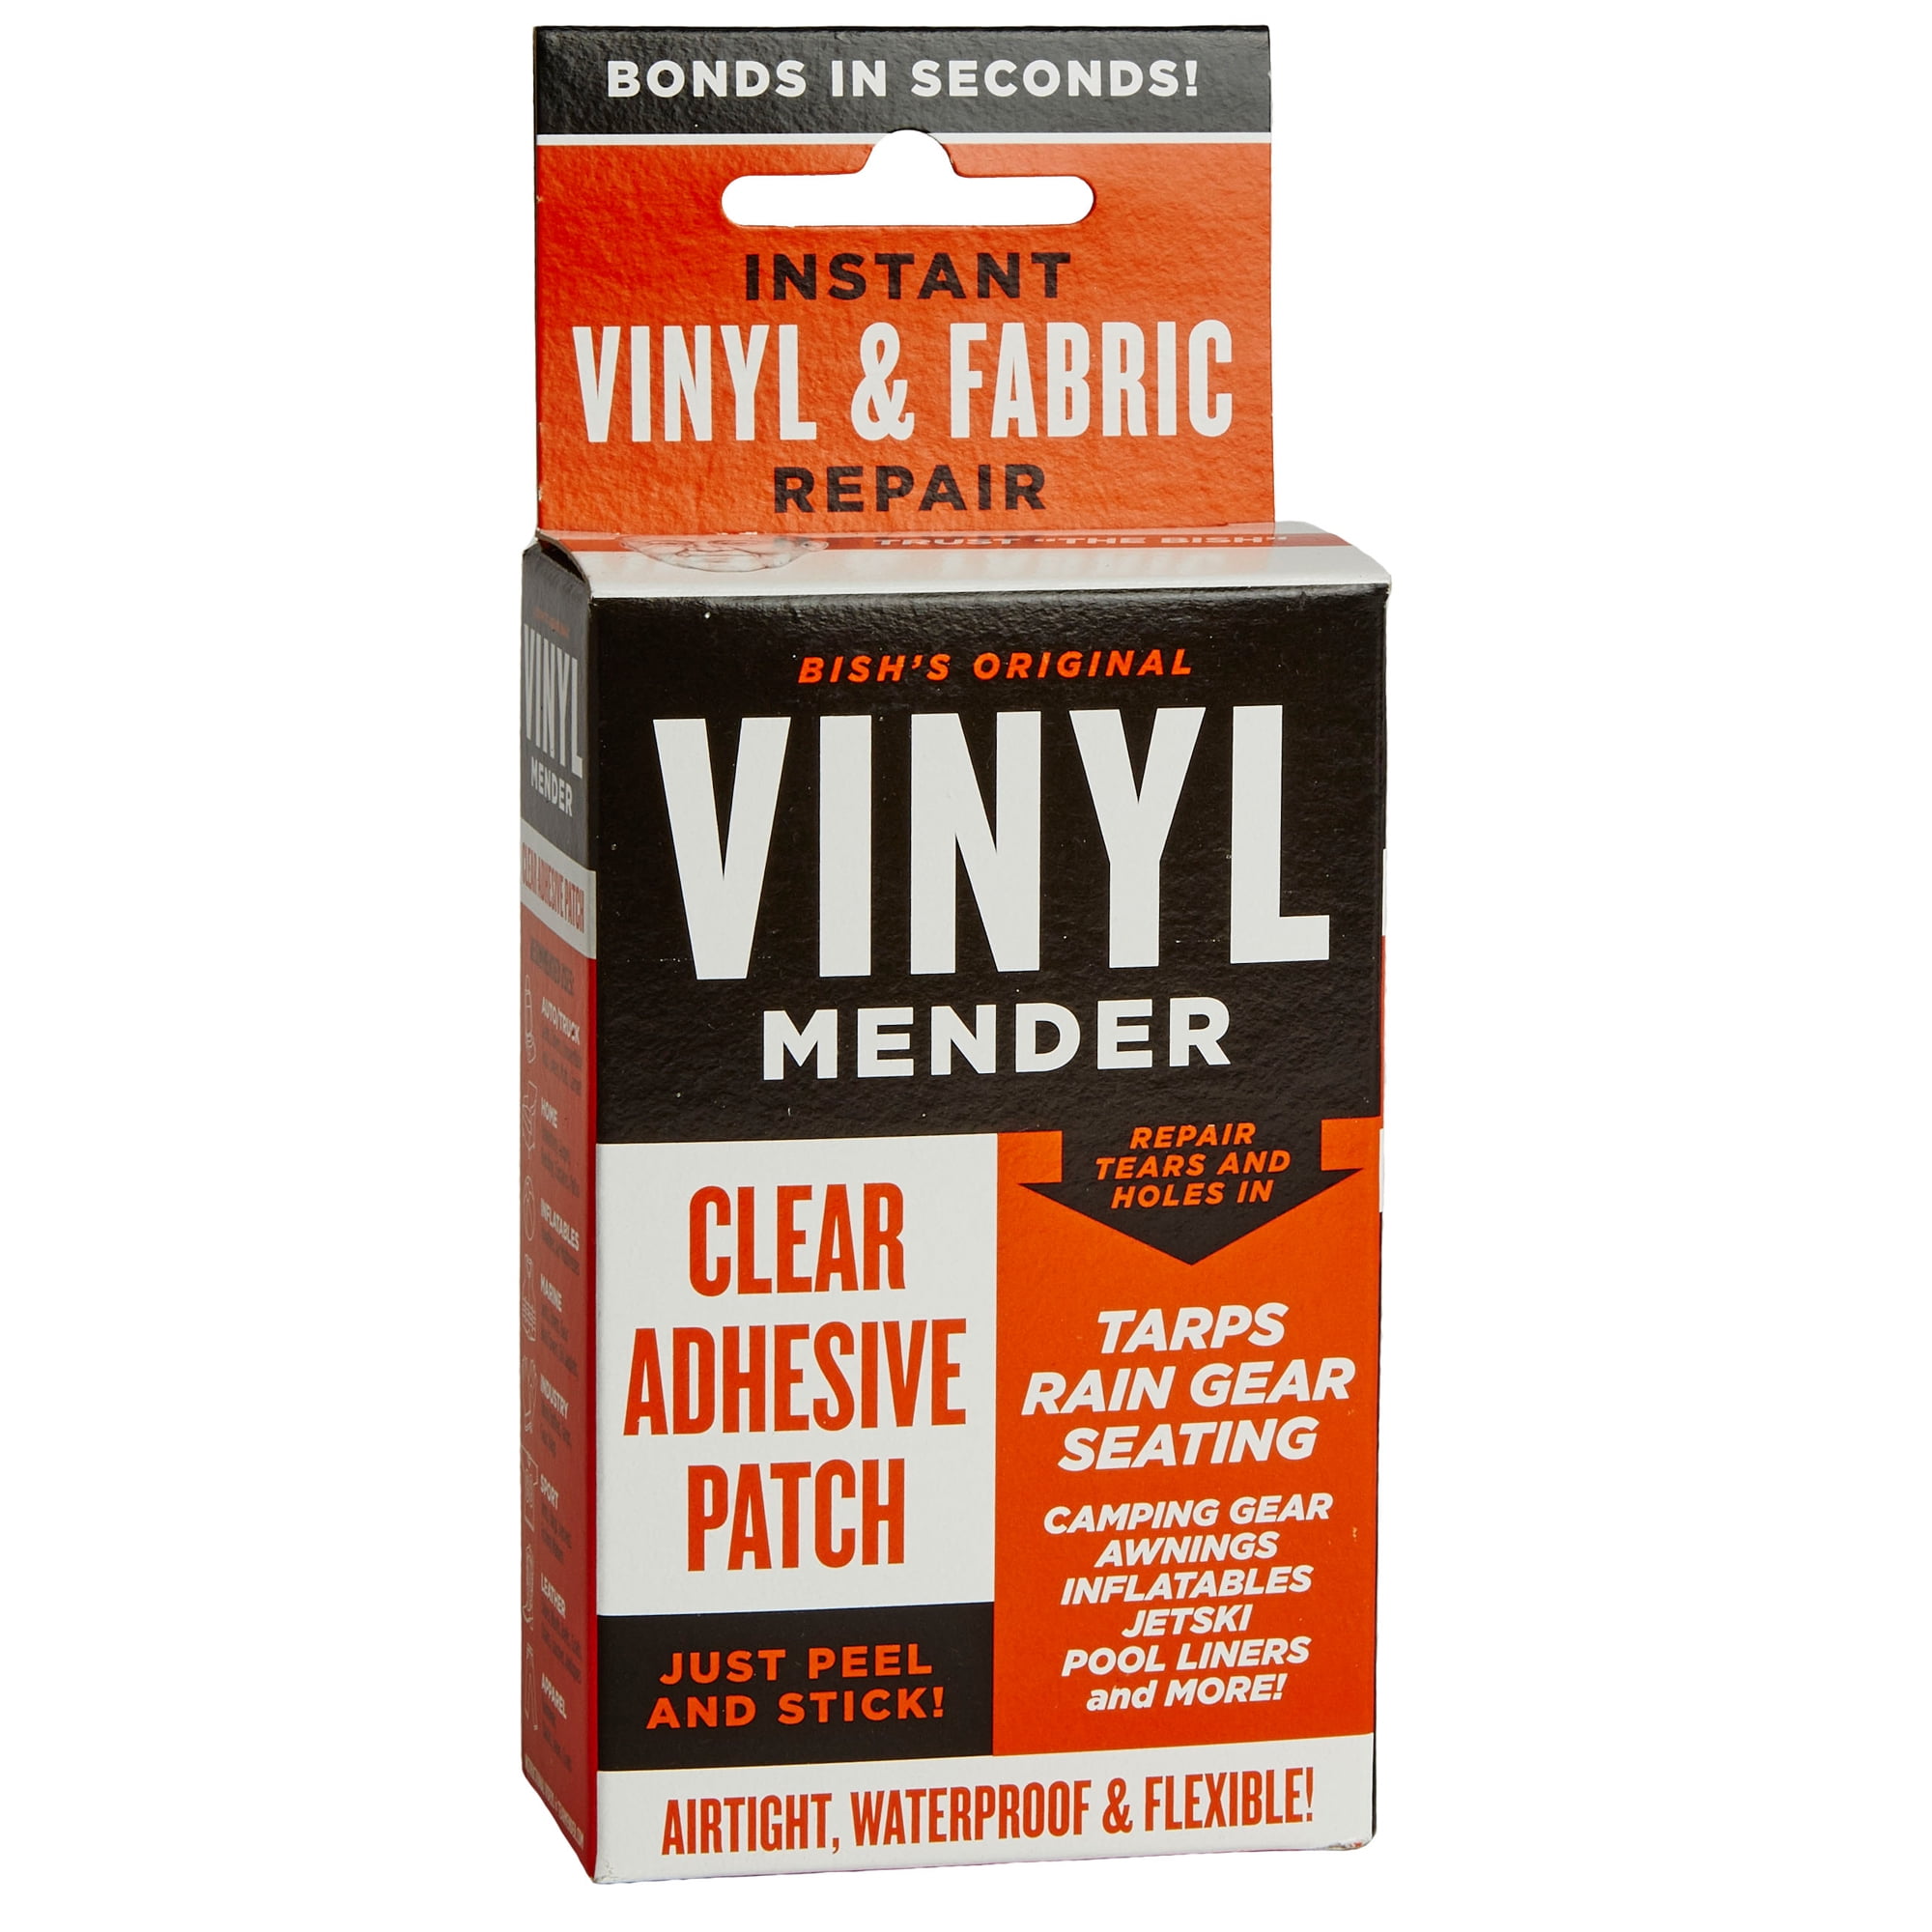 No Heat Liquid Leather & Vinyl Repair Kit Non toxic and odorless